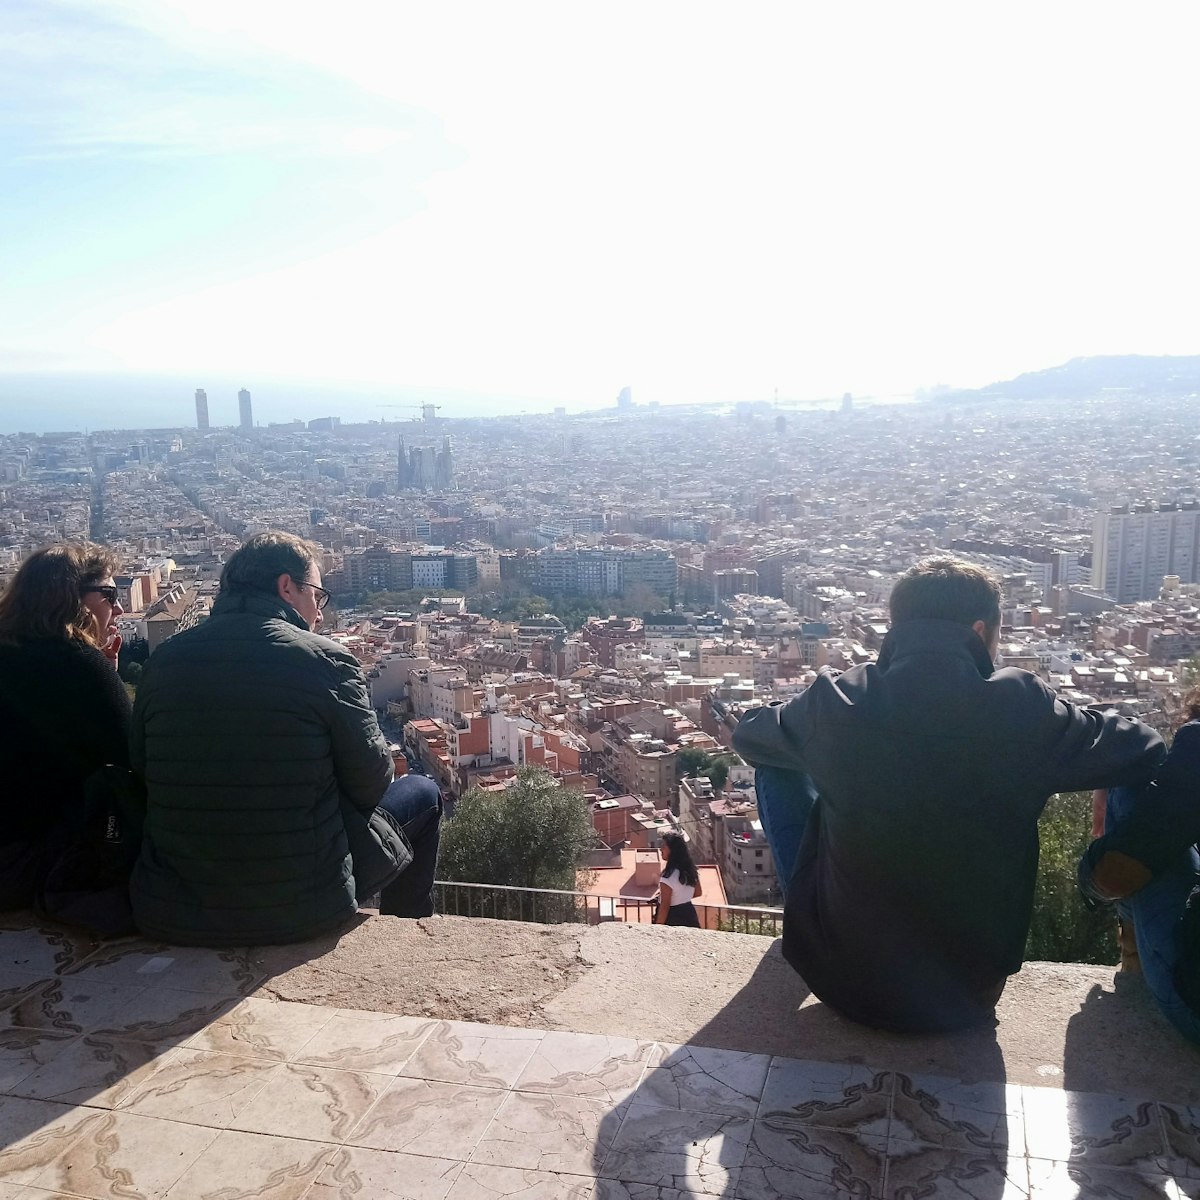 People admiring the view from Turó de la Rovira